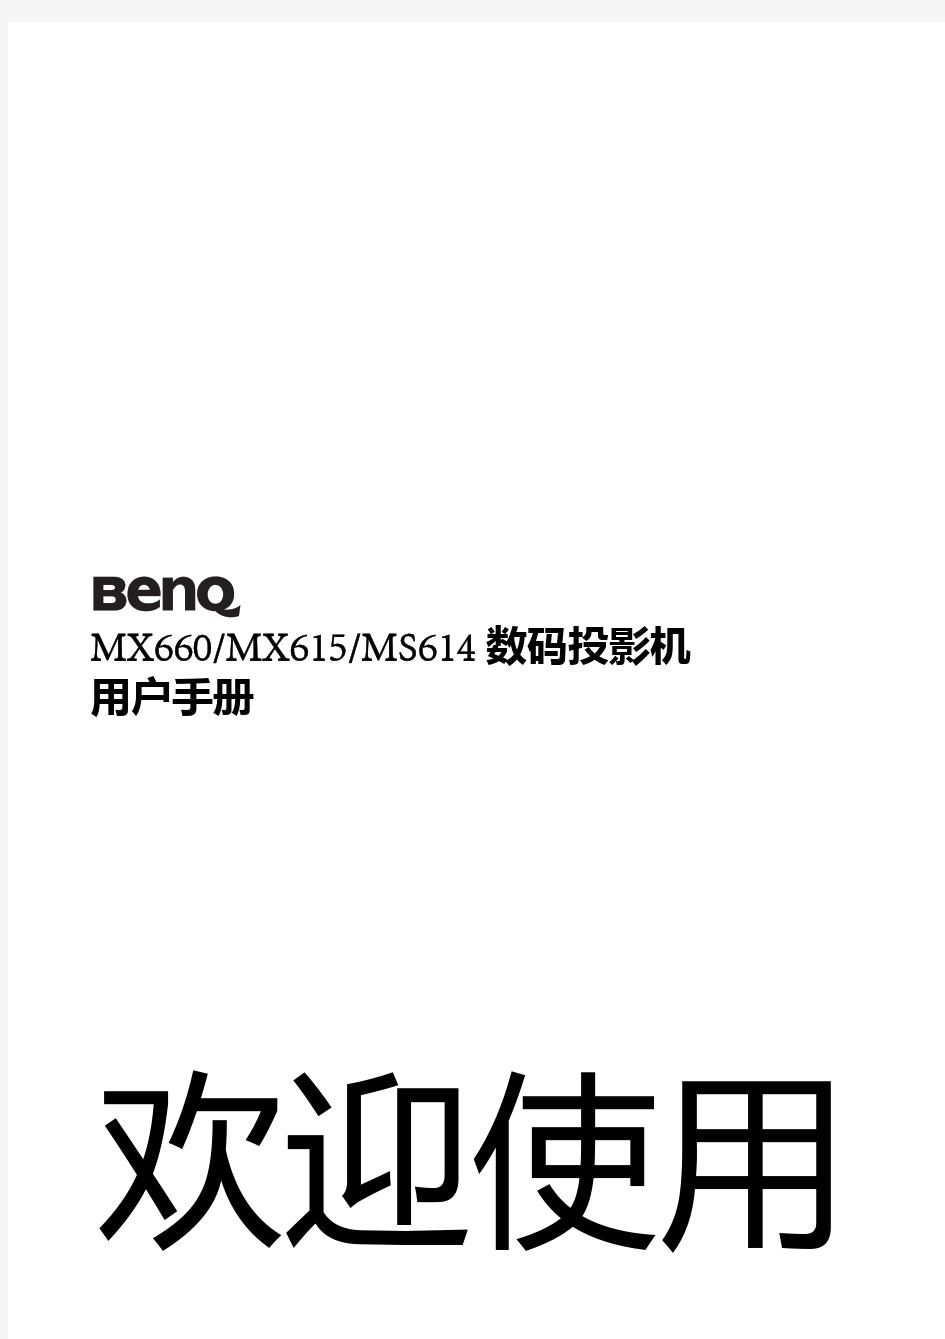 BENQ_明基 MS614 投影使用说明书